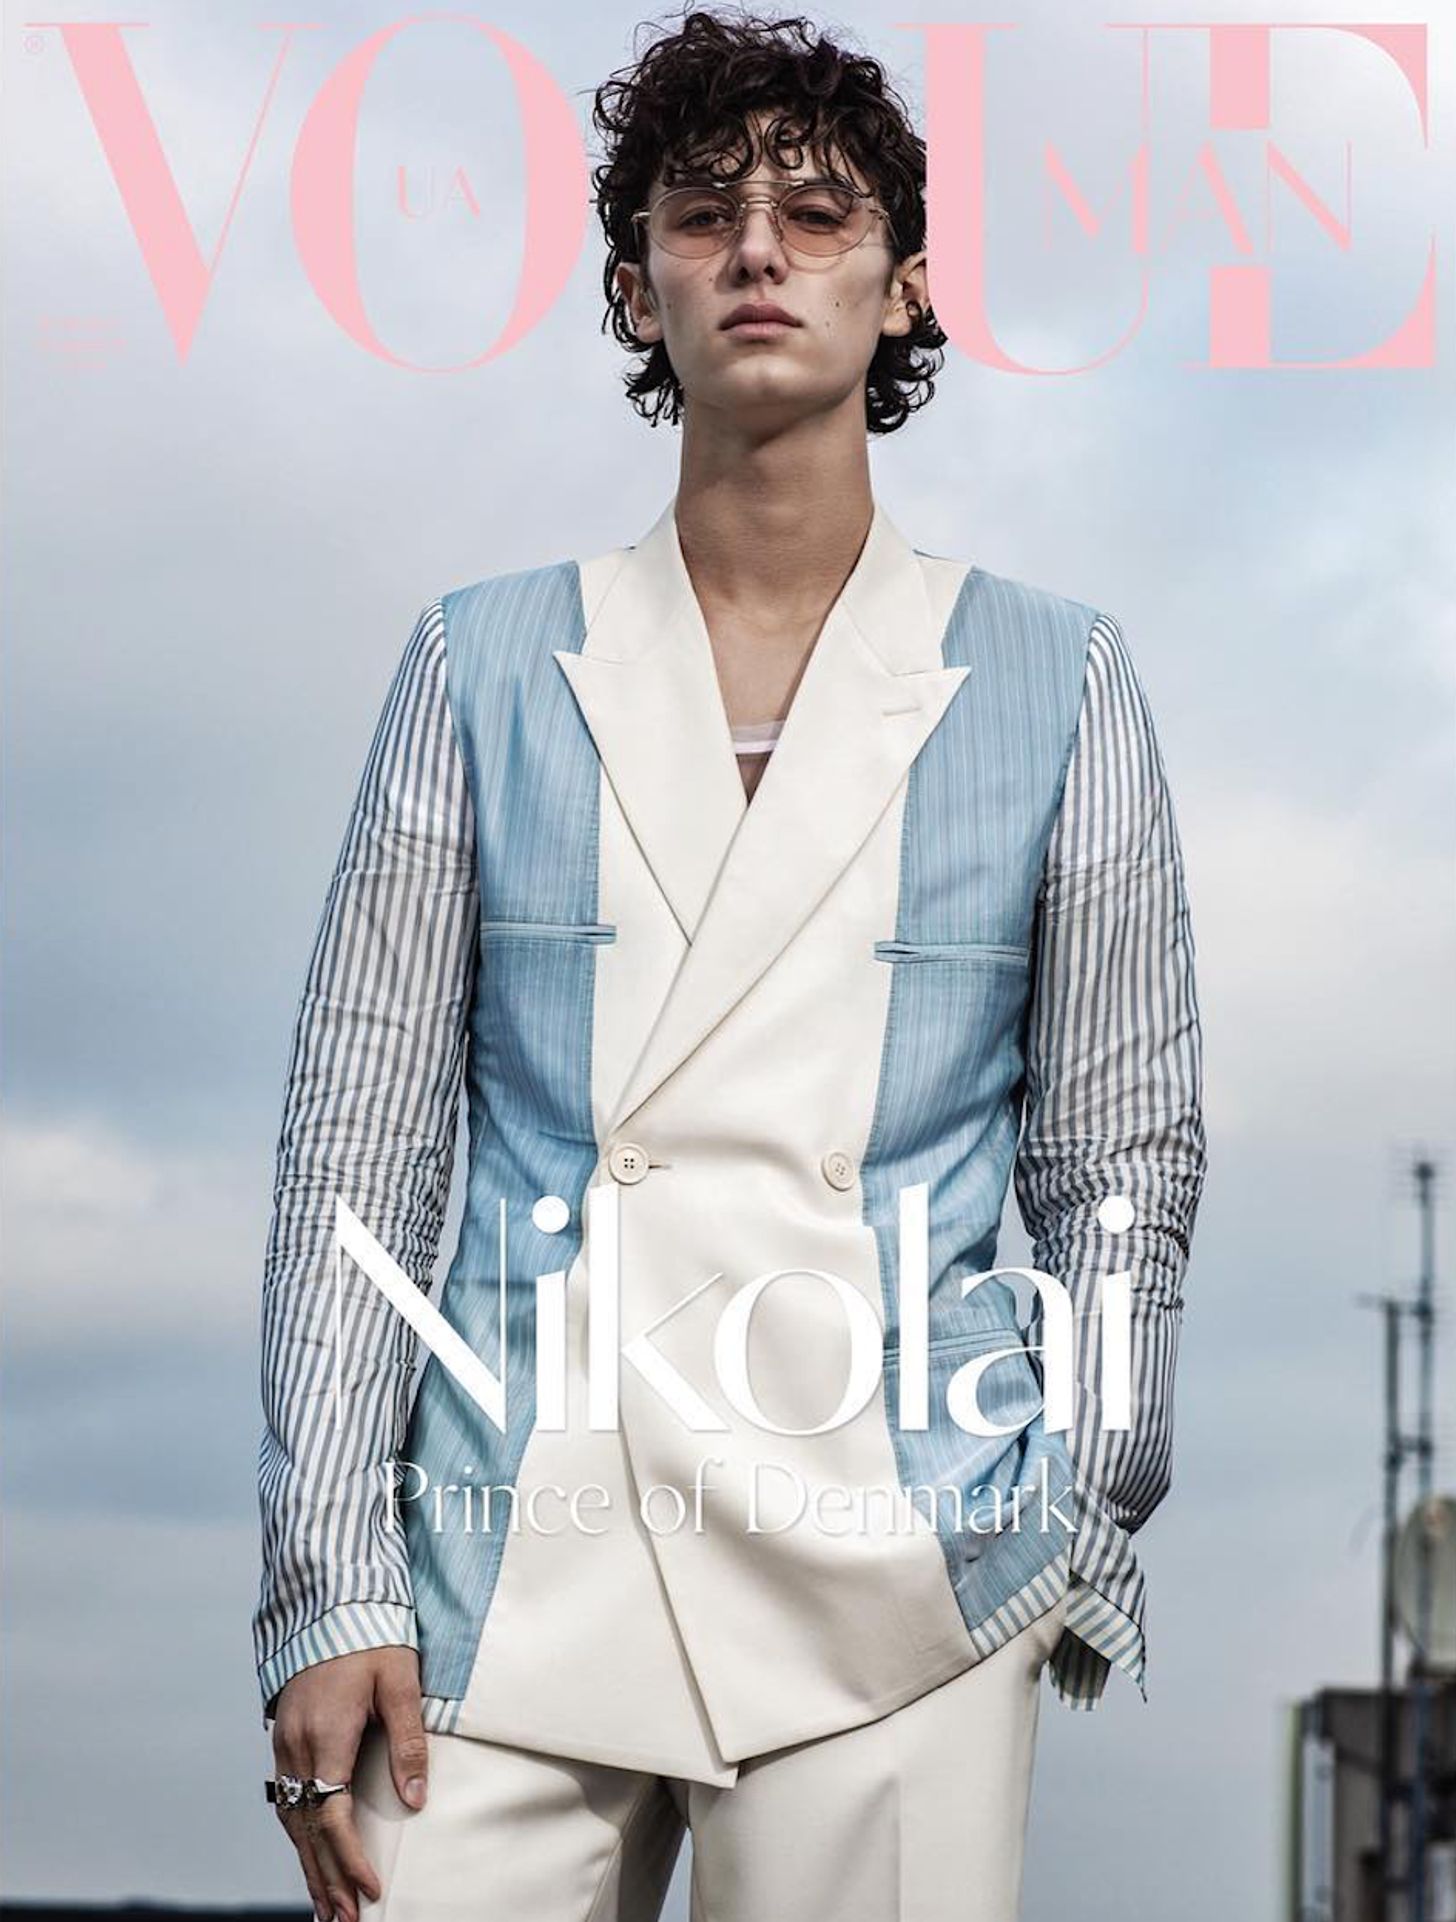 Foto's: Prins Nikolai schittert op cover Vogue